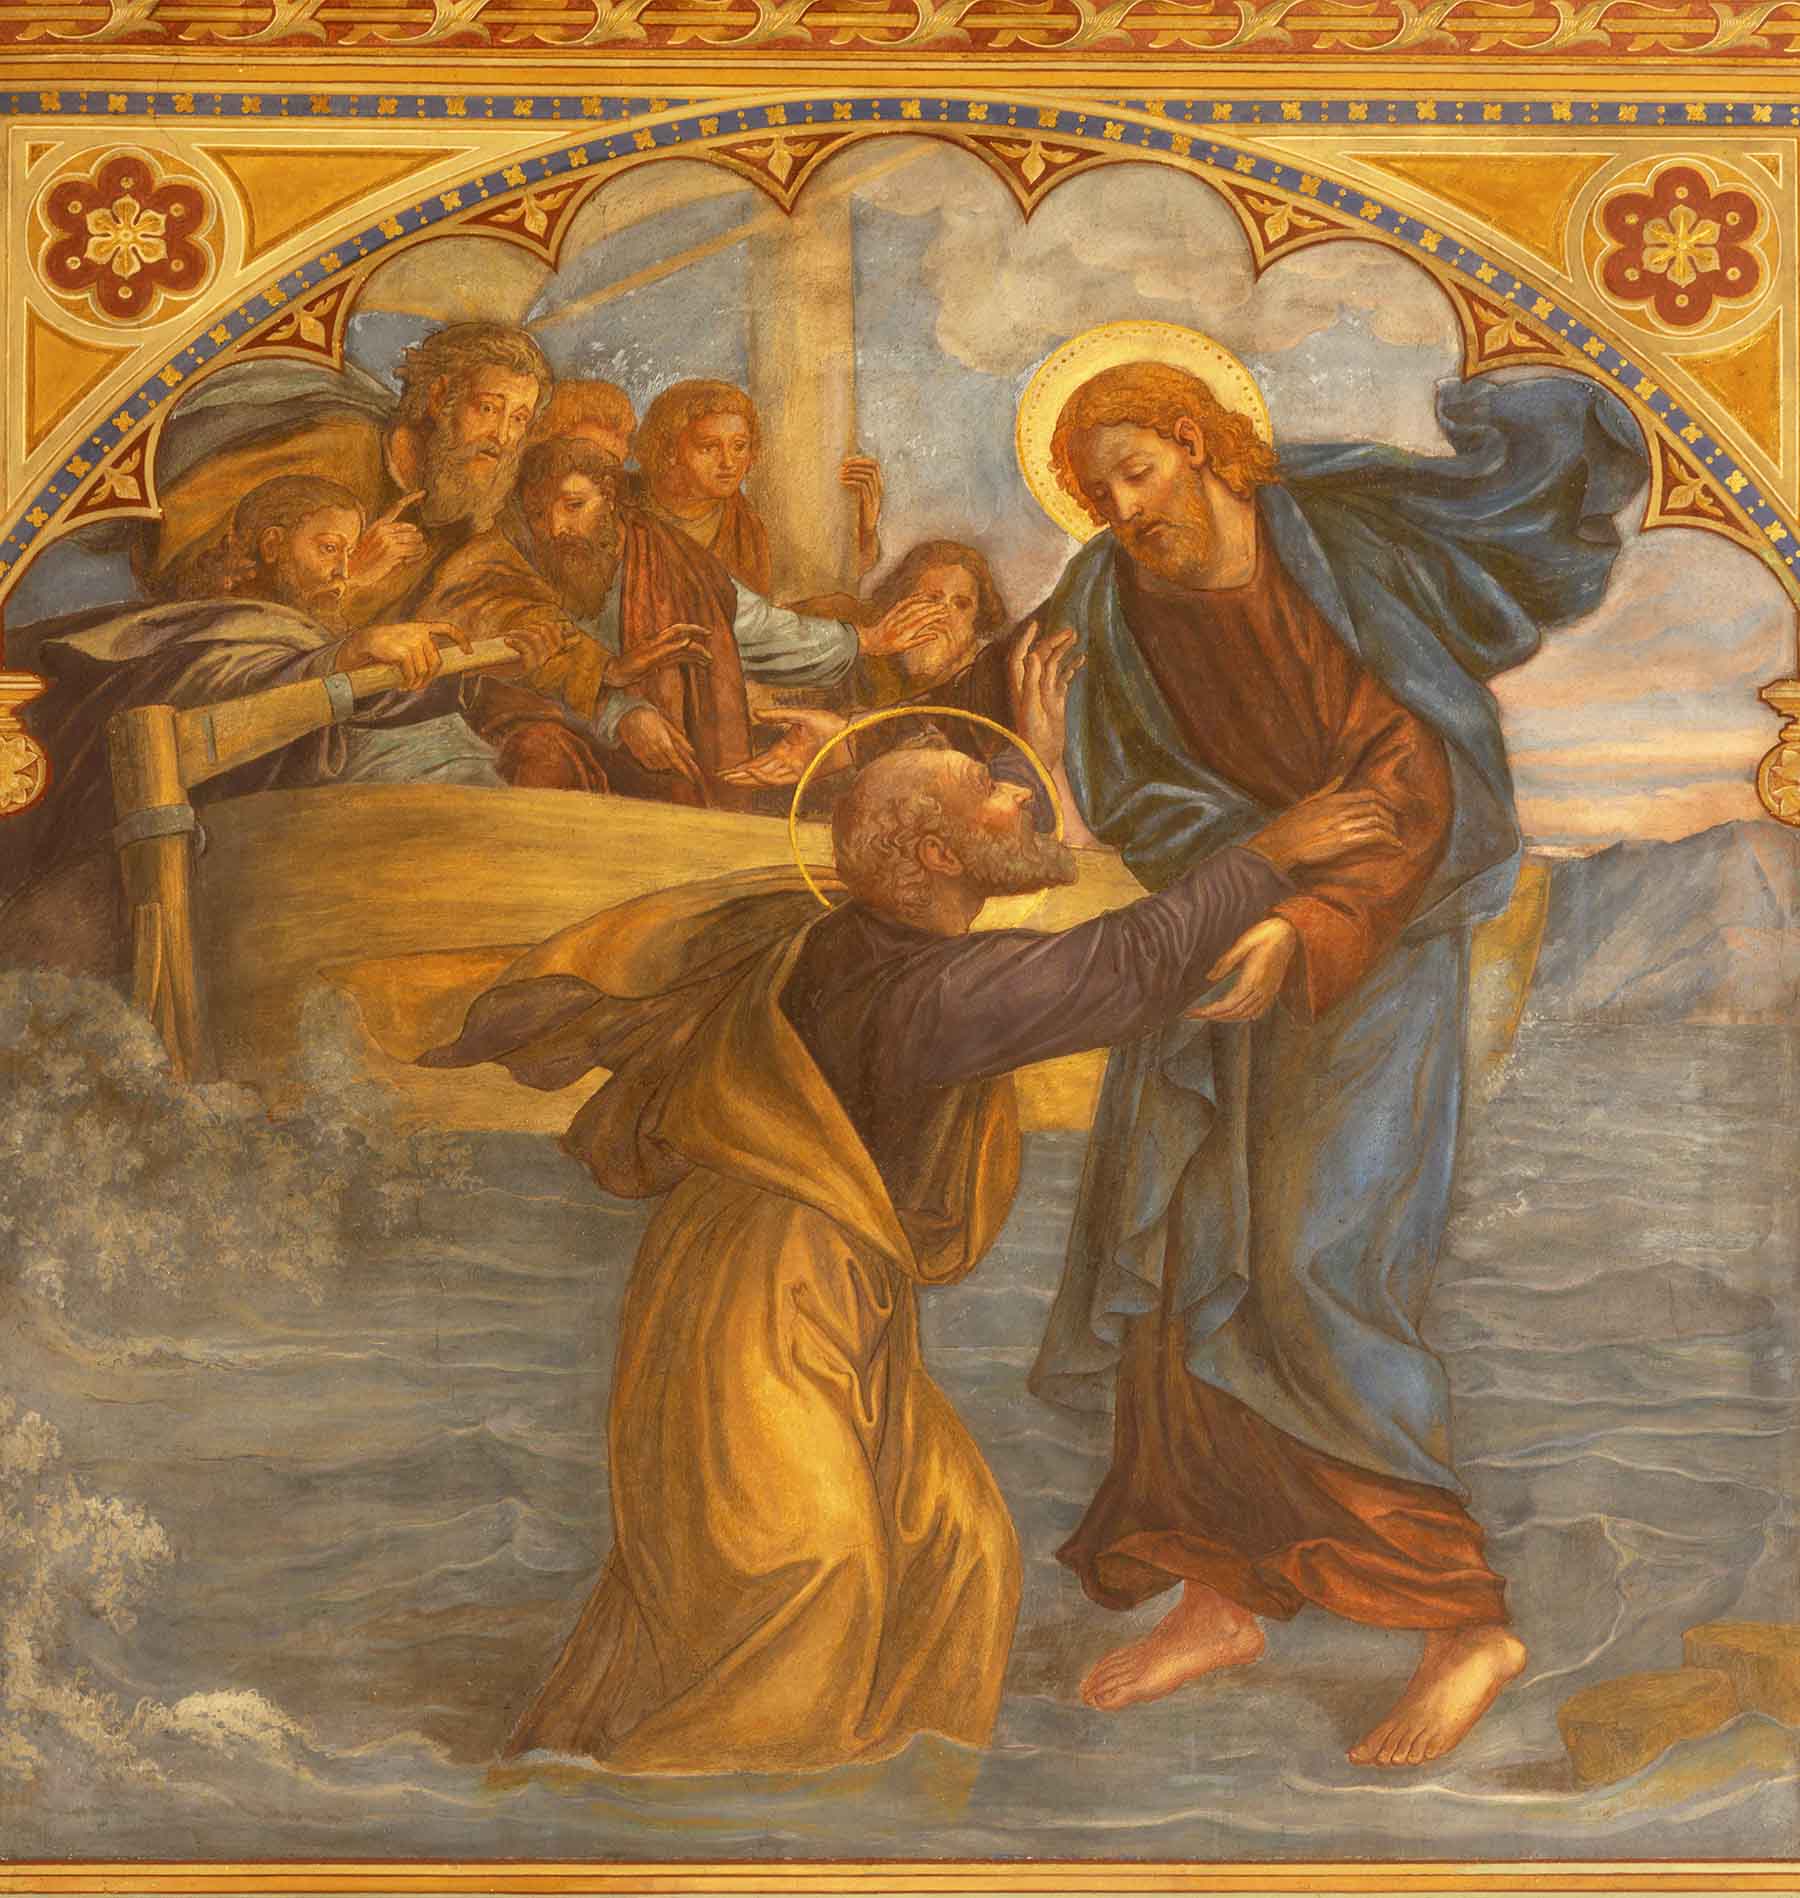 Peter walks on water to Jesus.